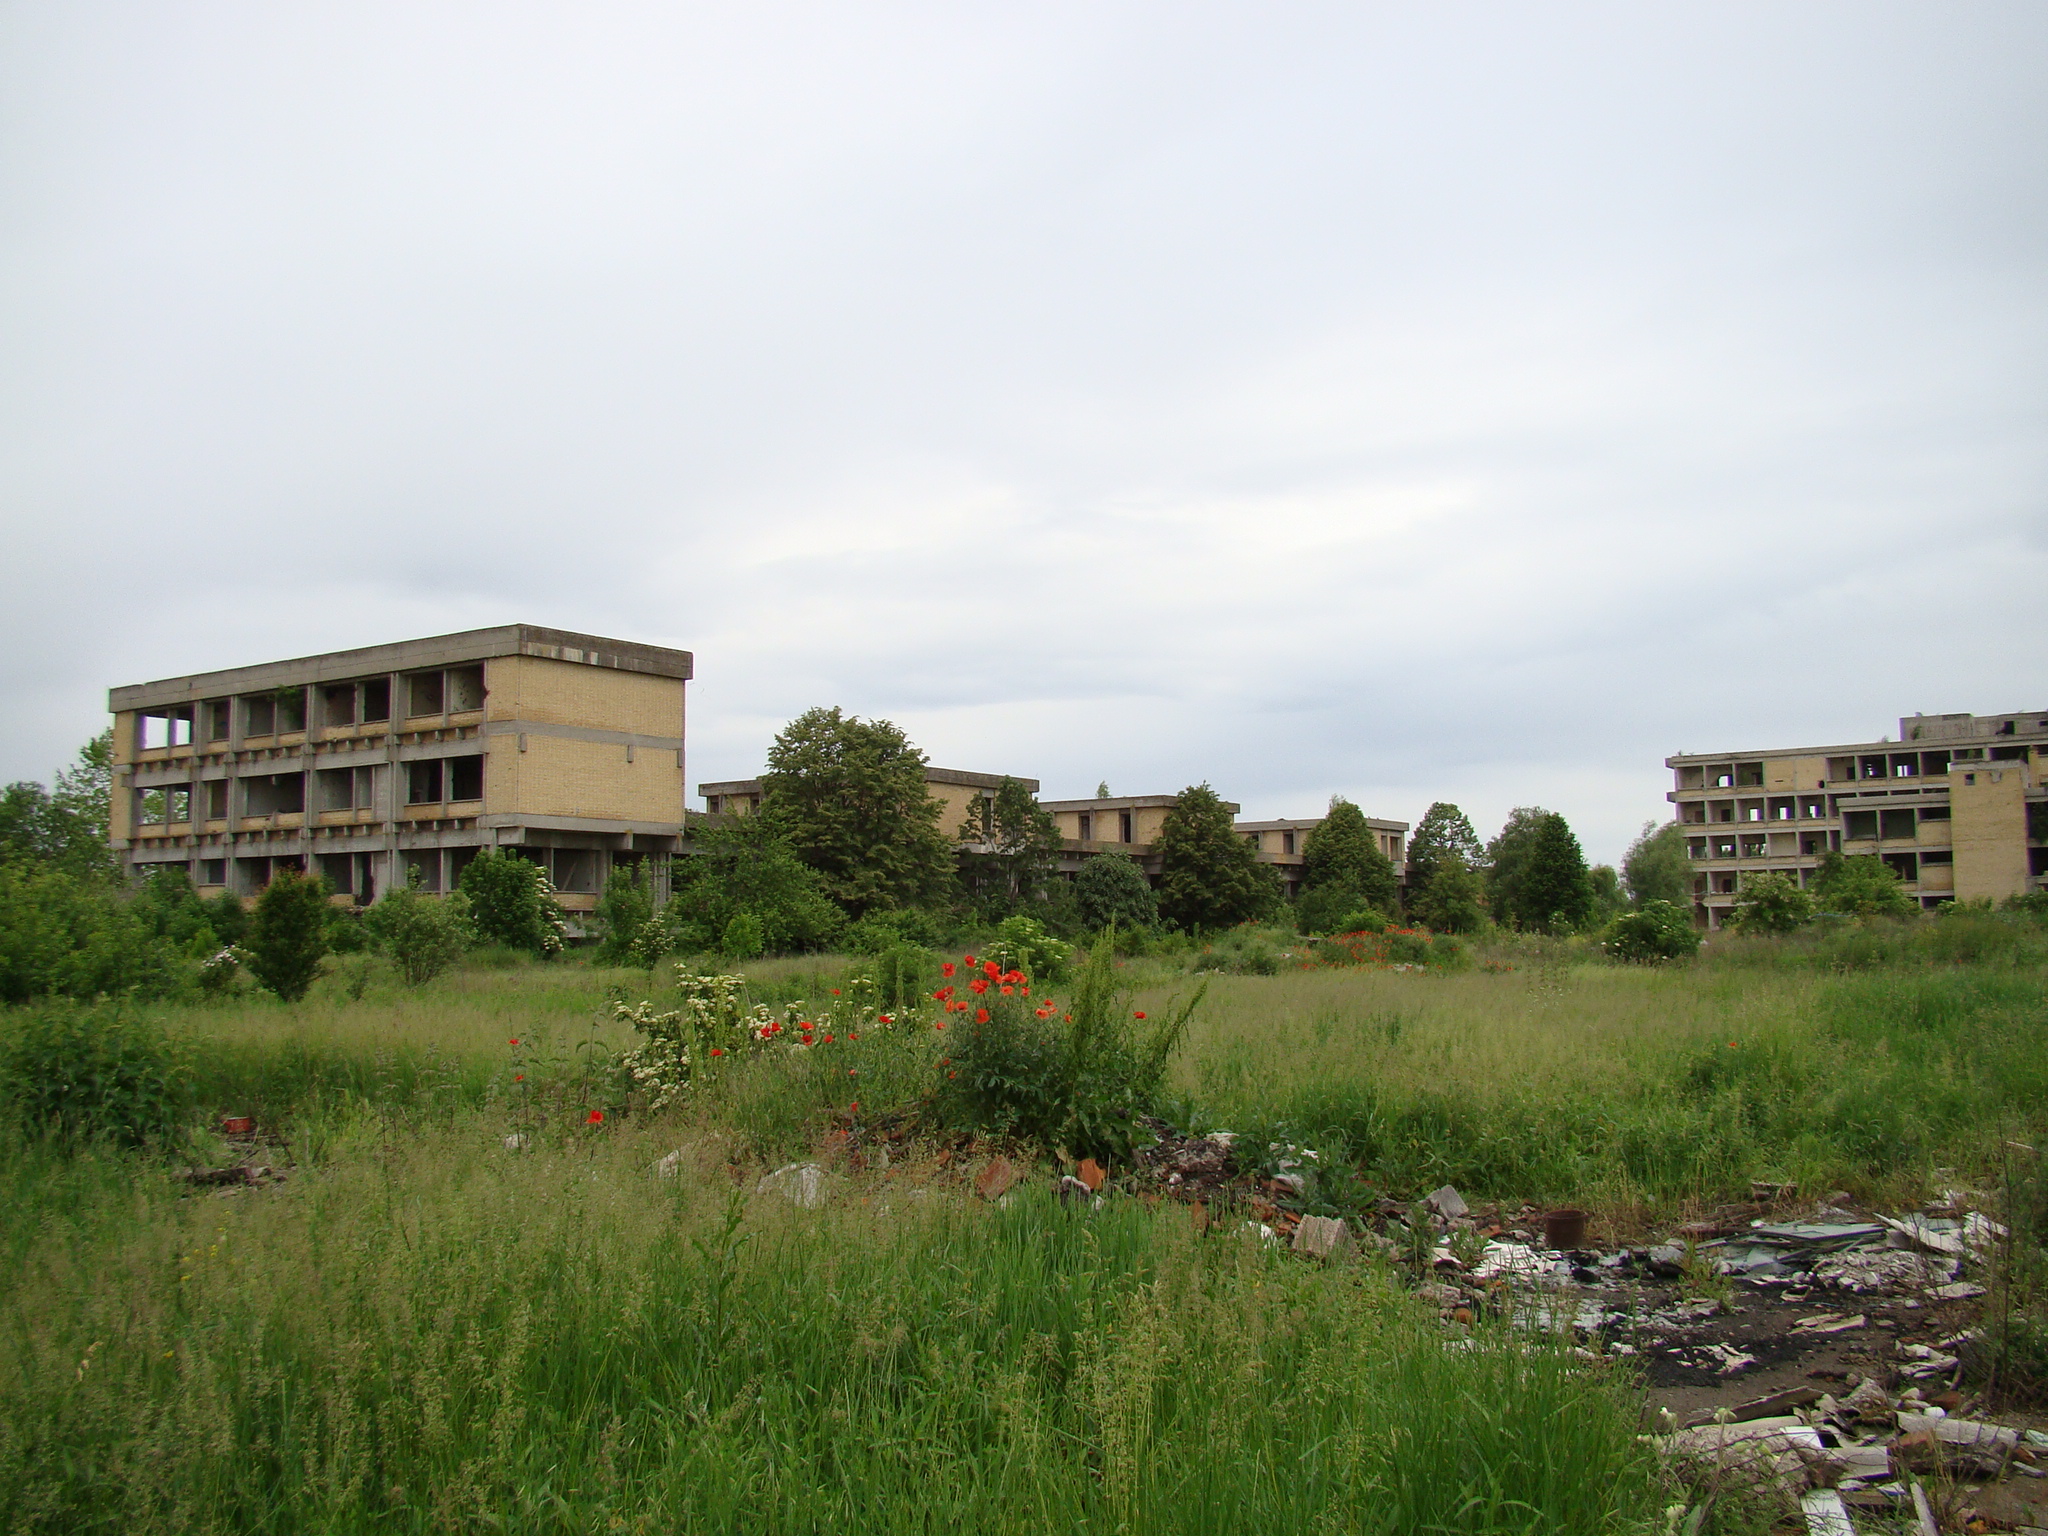 Poljoprivredni fakultet Osijek ruševina